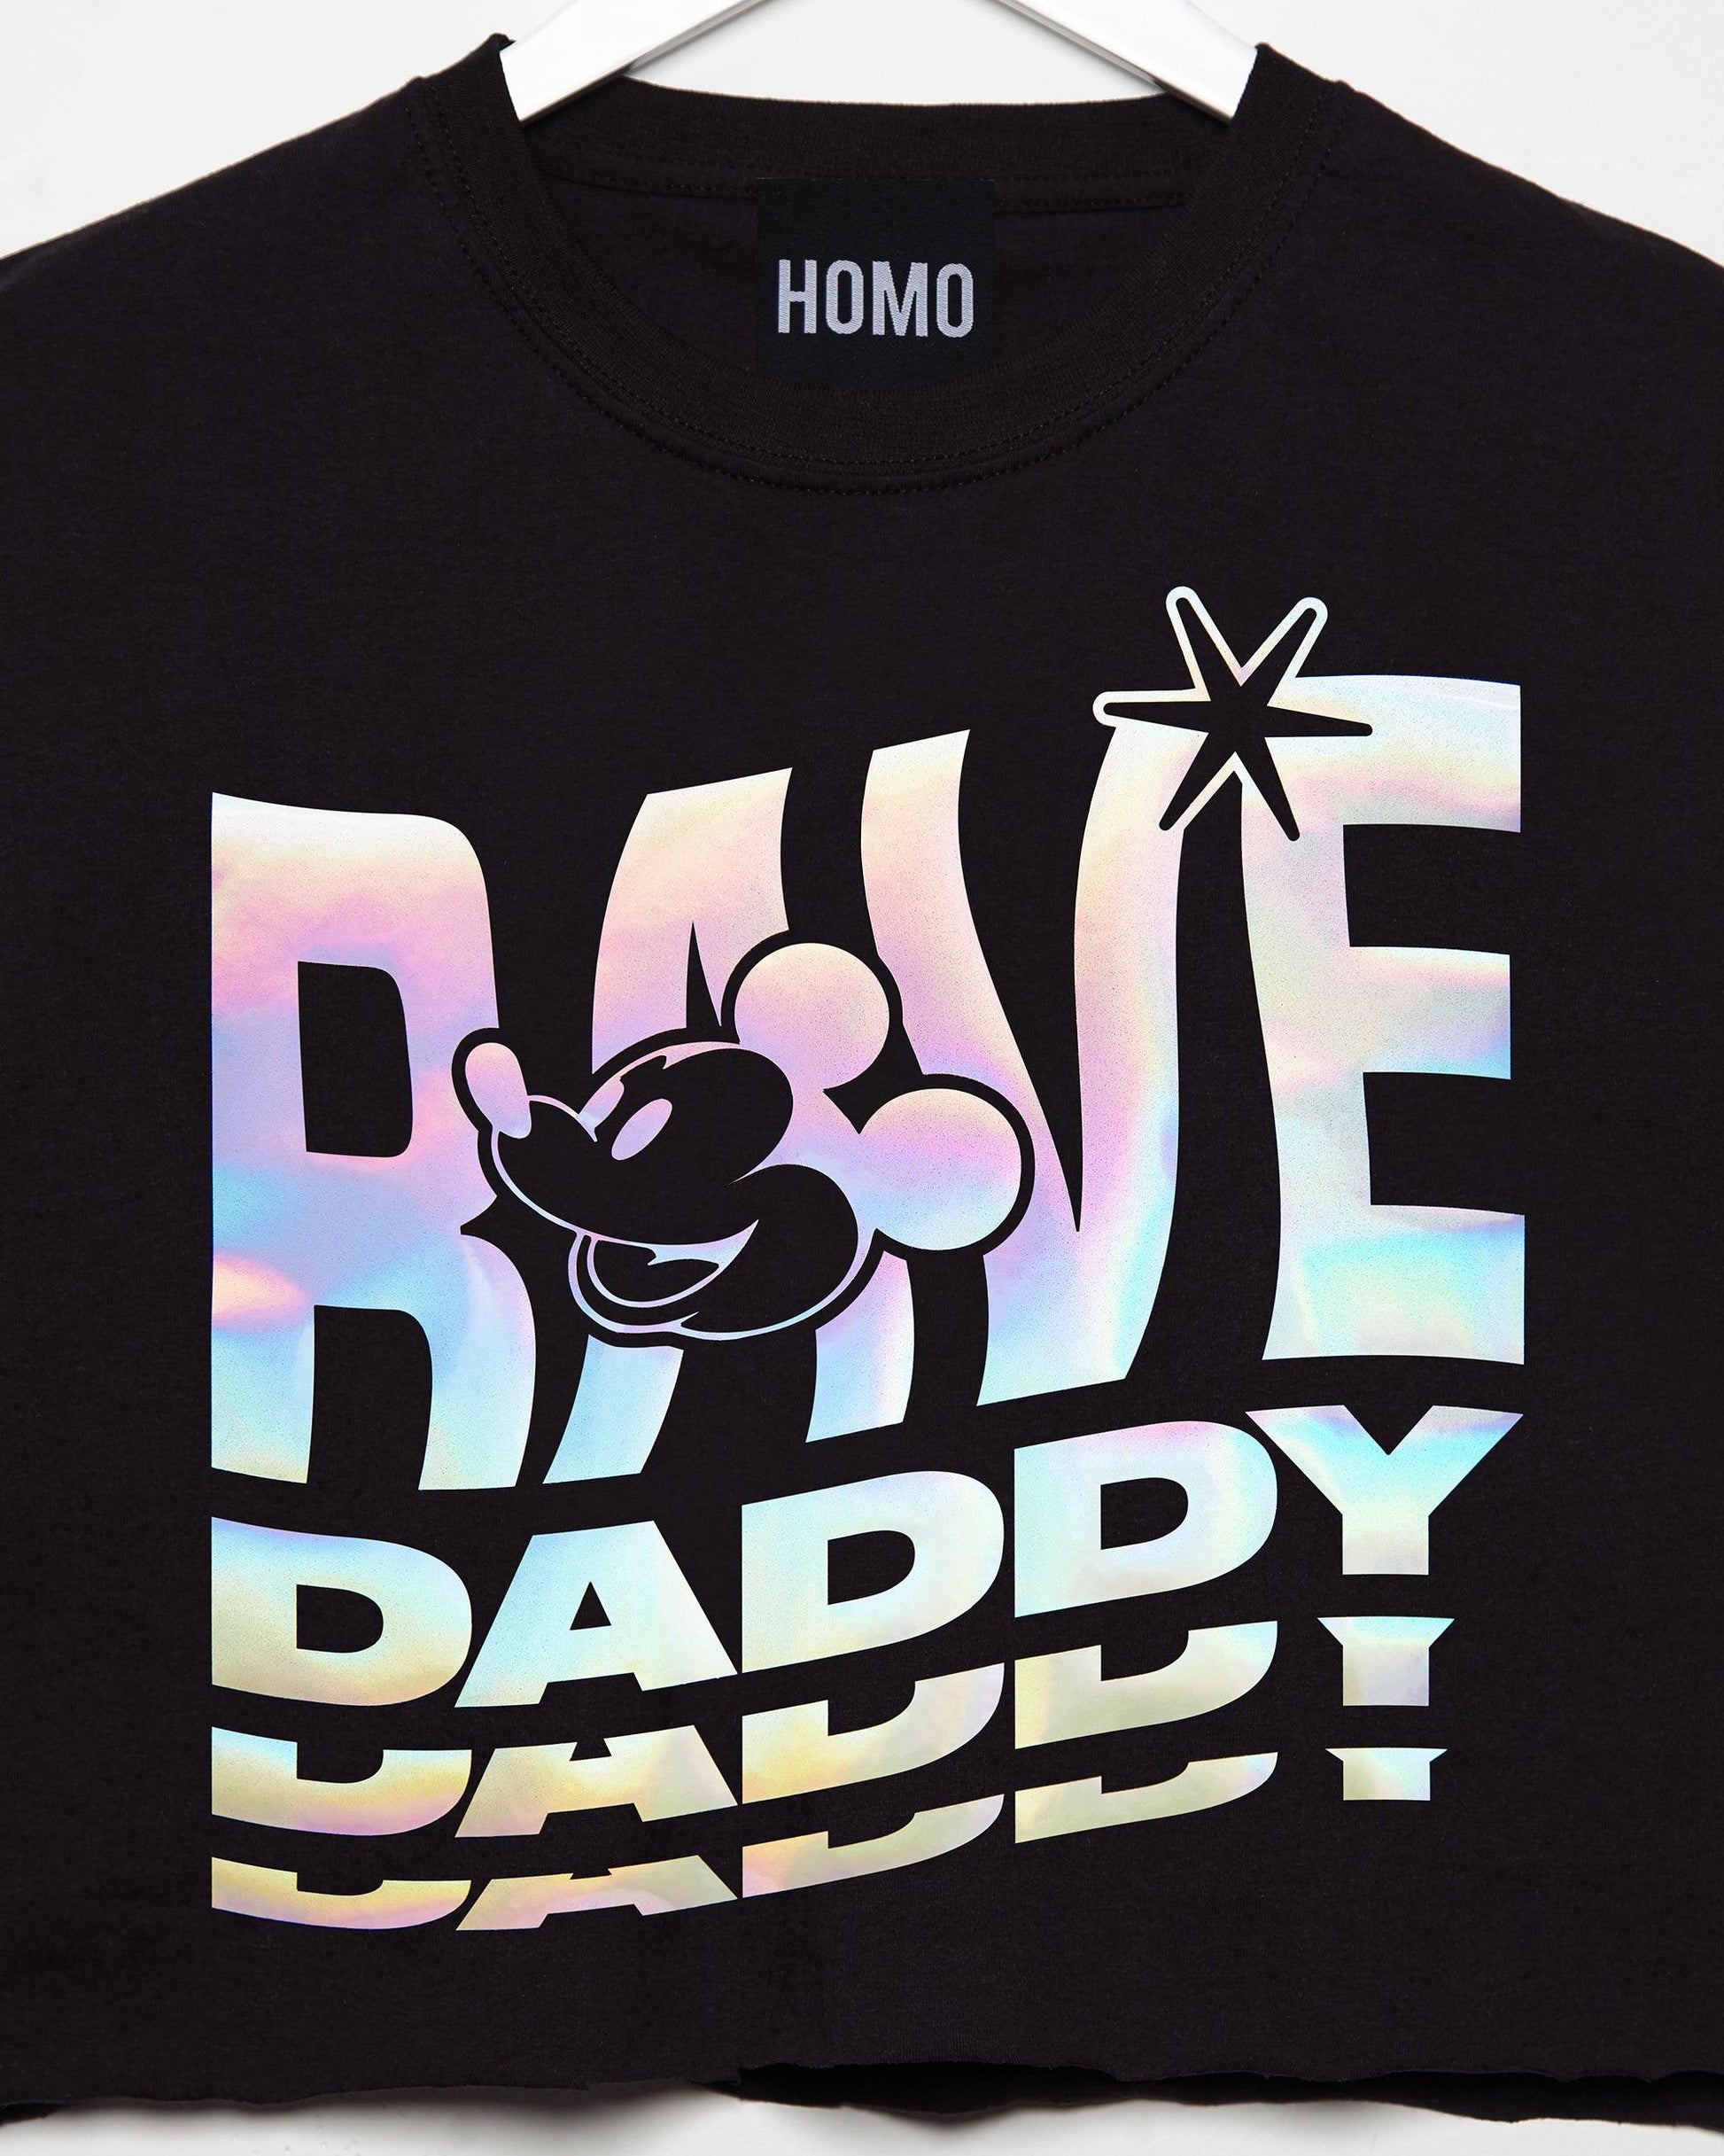 Rave Daddy, Hologram - men's crop top - HOMOLONDON